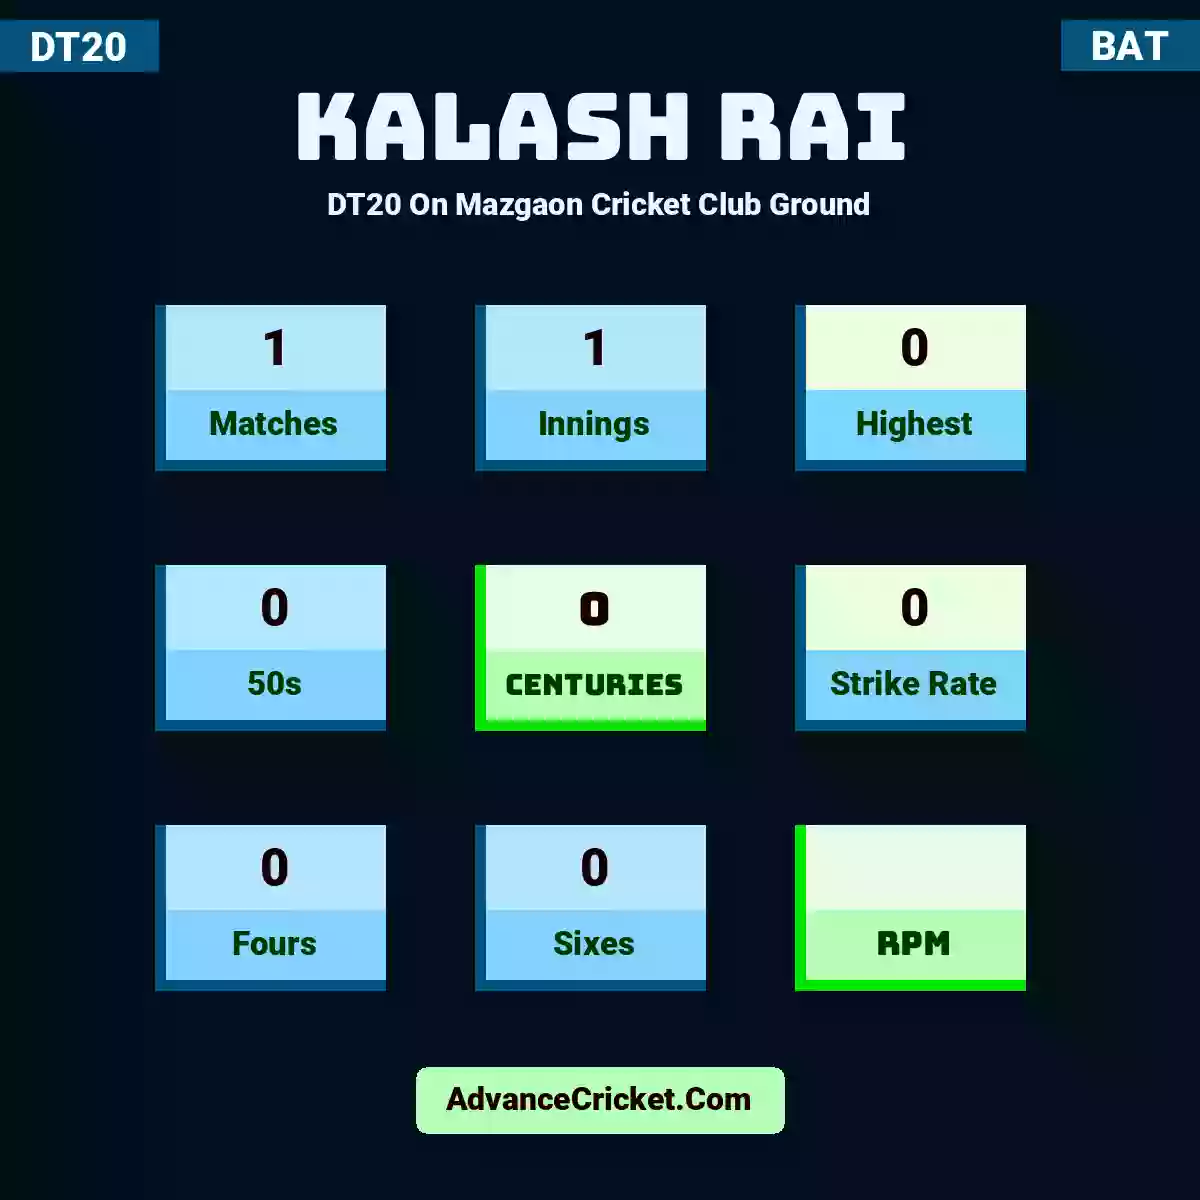 Kalash Rai DT20  On Mazgaon Cricket Club Ground, Kalash Rai played 1 matches, scored 0 runs as highest, 0 half-centuries, and 0 centuries, with a strike rate of 0. K.Rai hit 0 fours and 0 sixes.